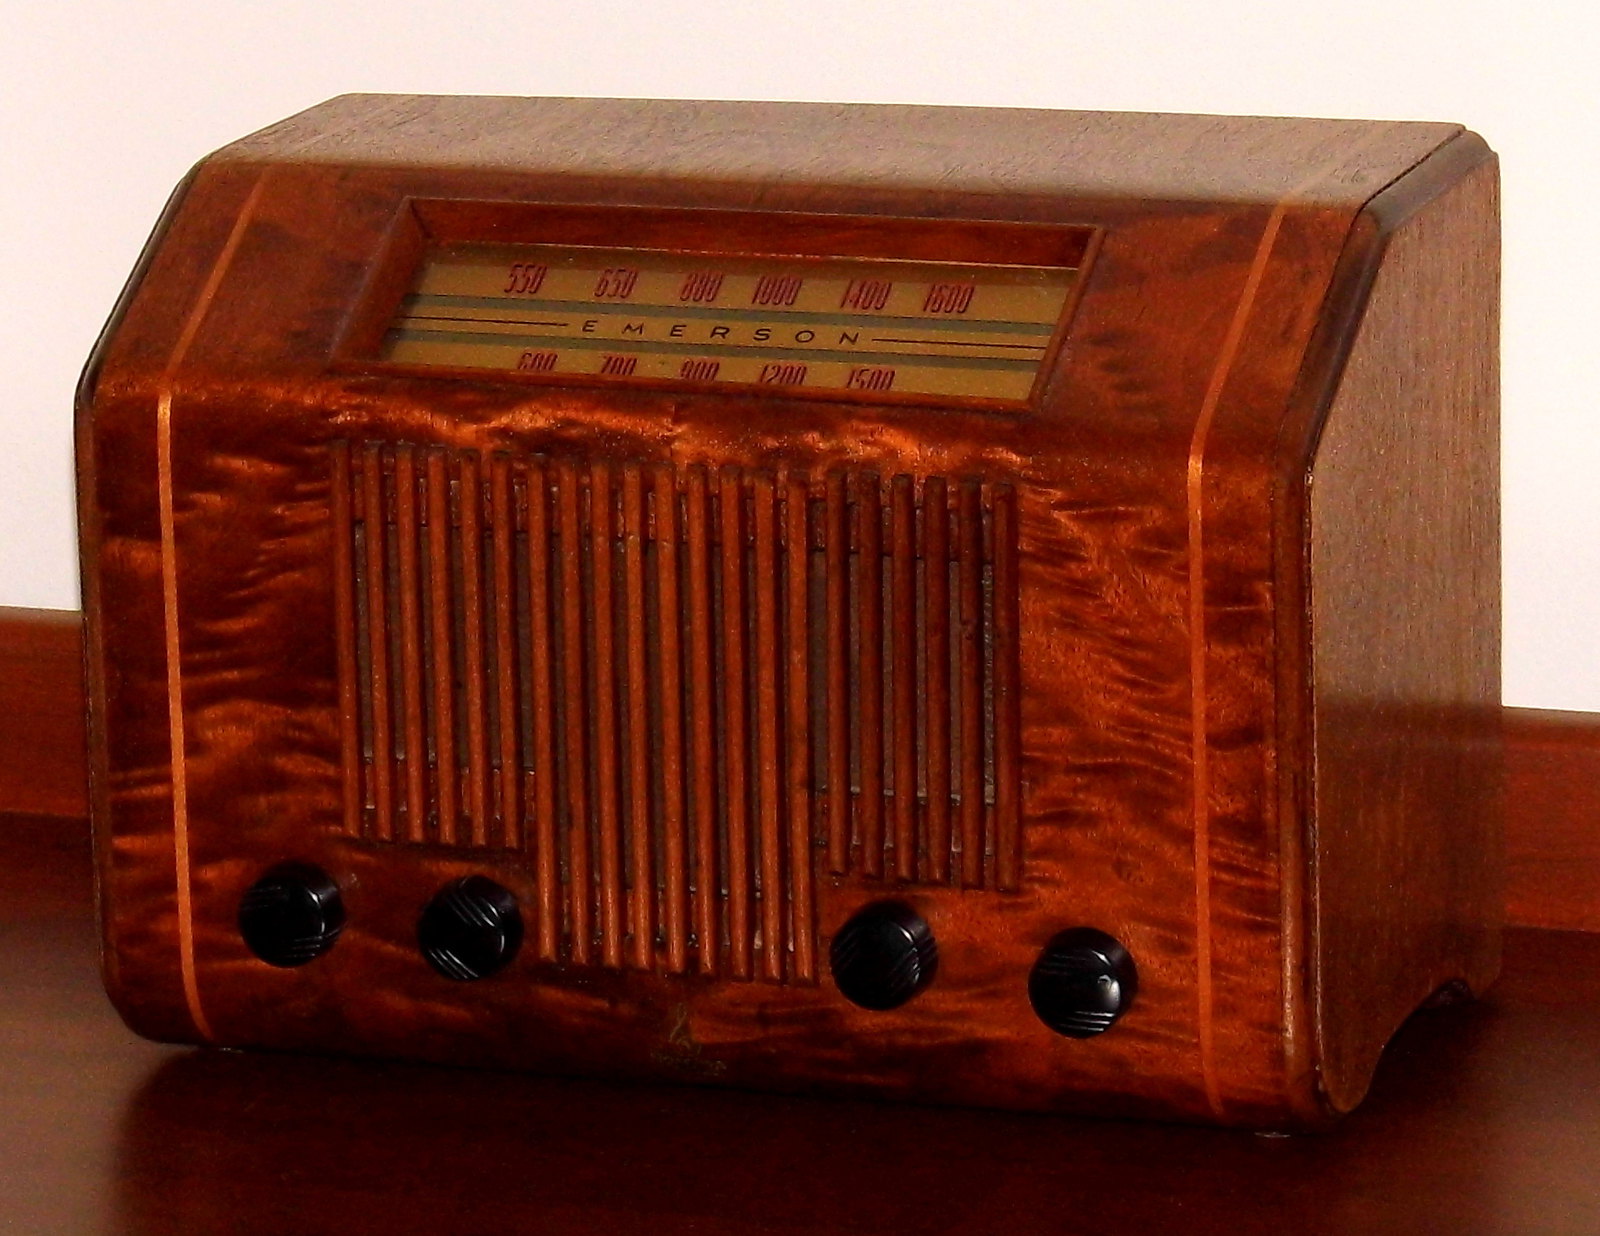 Emerson AM radio with figured walnut case, image by Joe Haupt